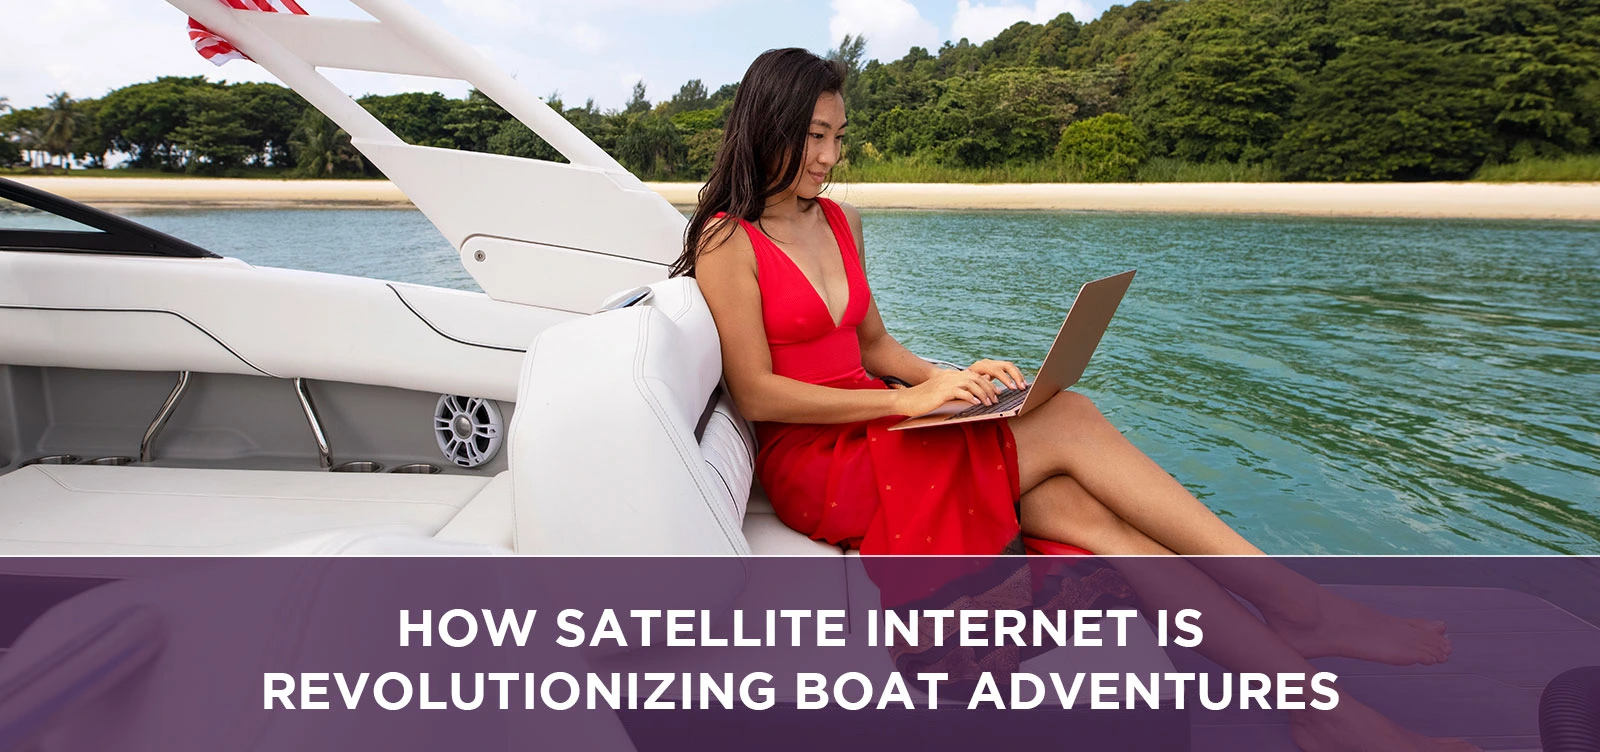 How Satellite Internet is Revolutionizing Boat Adventures?